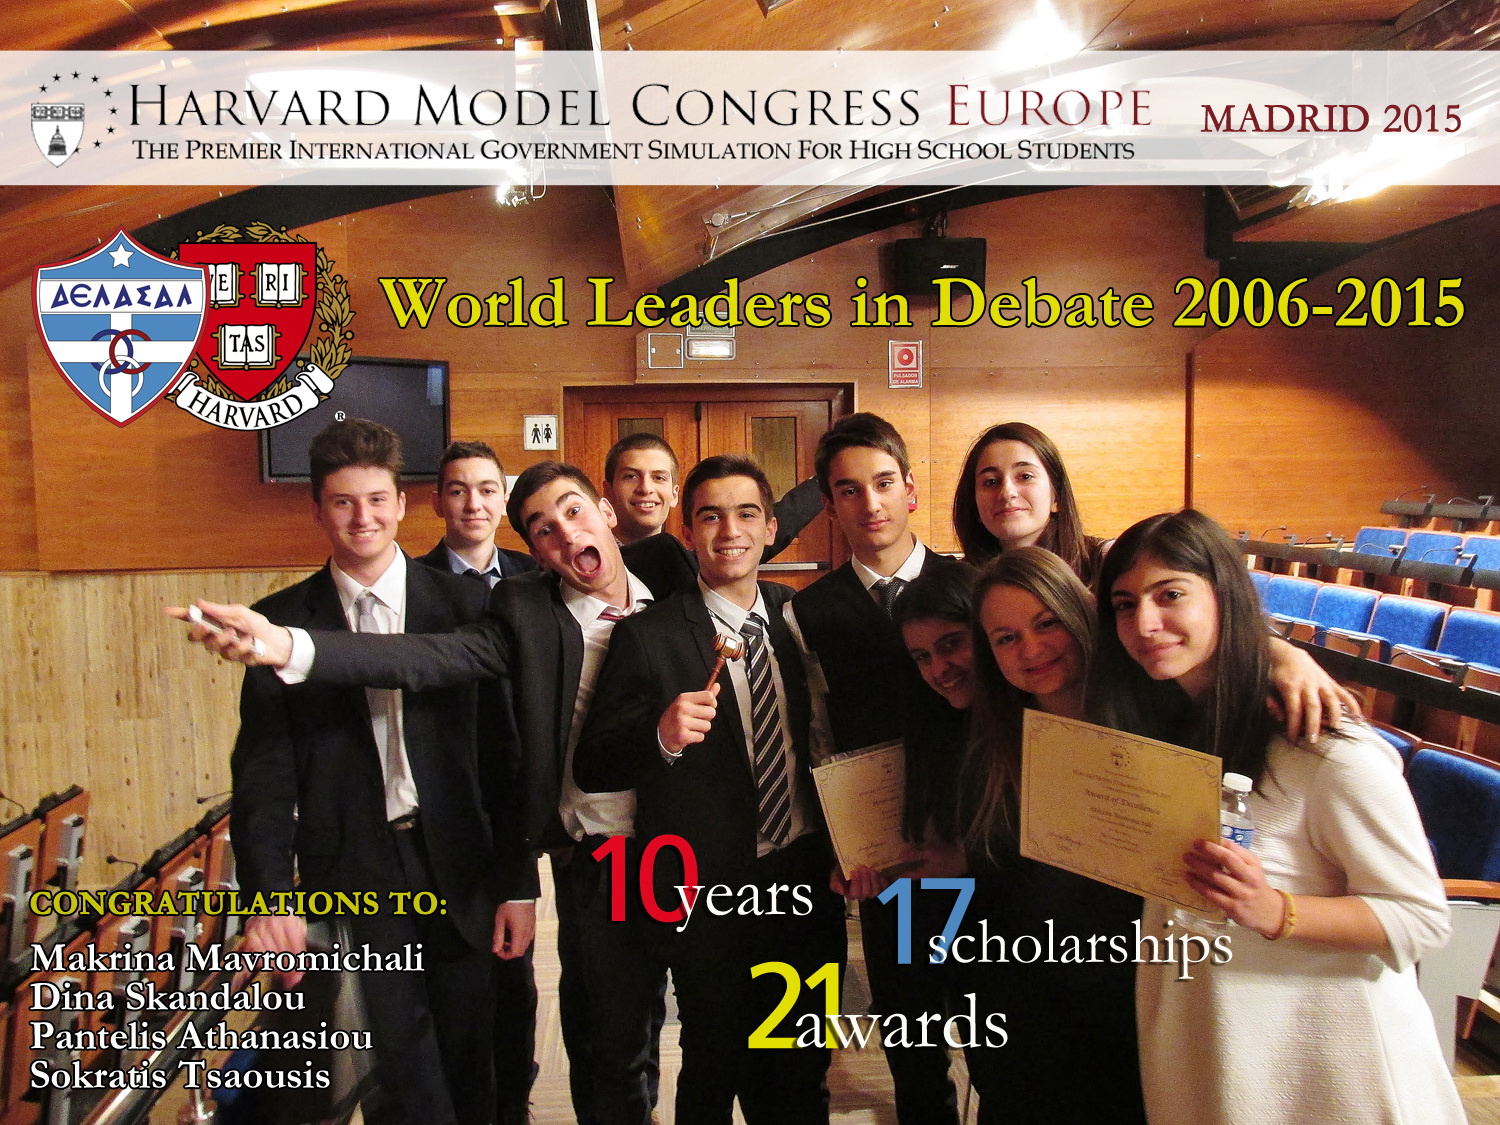 To Κολέγιο «ΔΕΛΑΣΑΛ» στην κορυφή! – Τέσσερα πρώτα βραβεία στον διαγωνισμό HARVARD MODEL CONGRESS EUROPE!